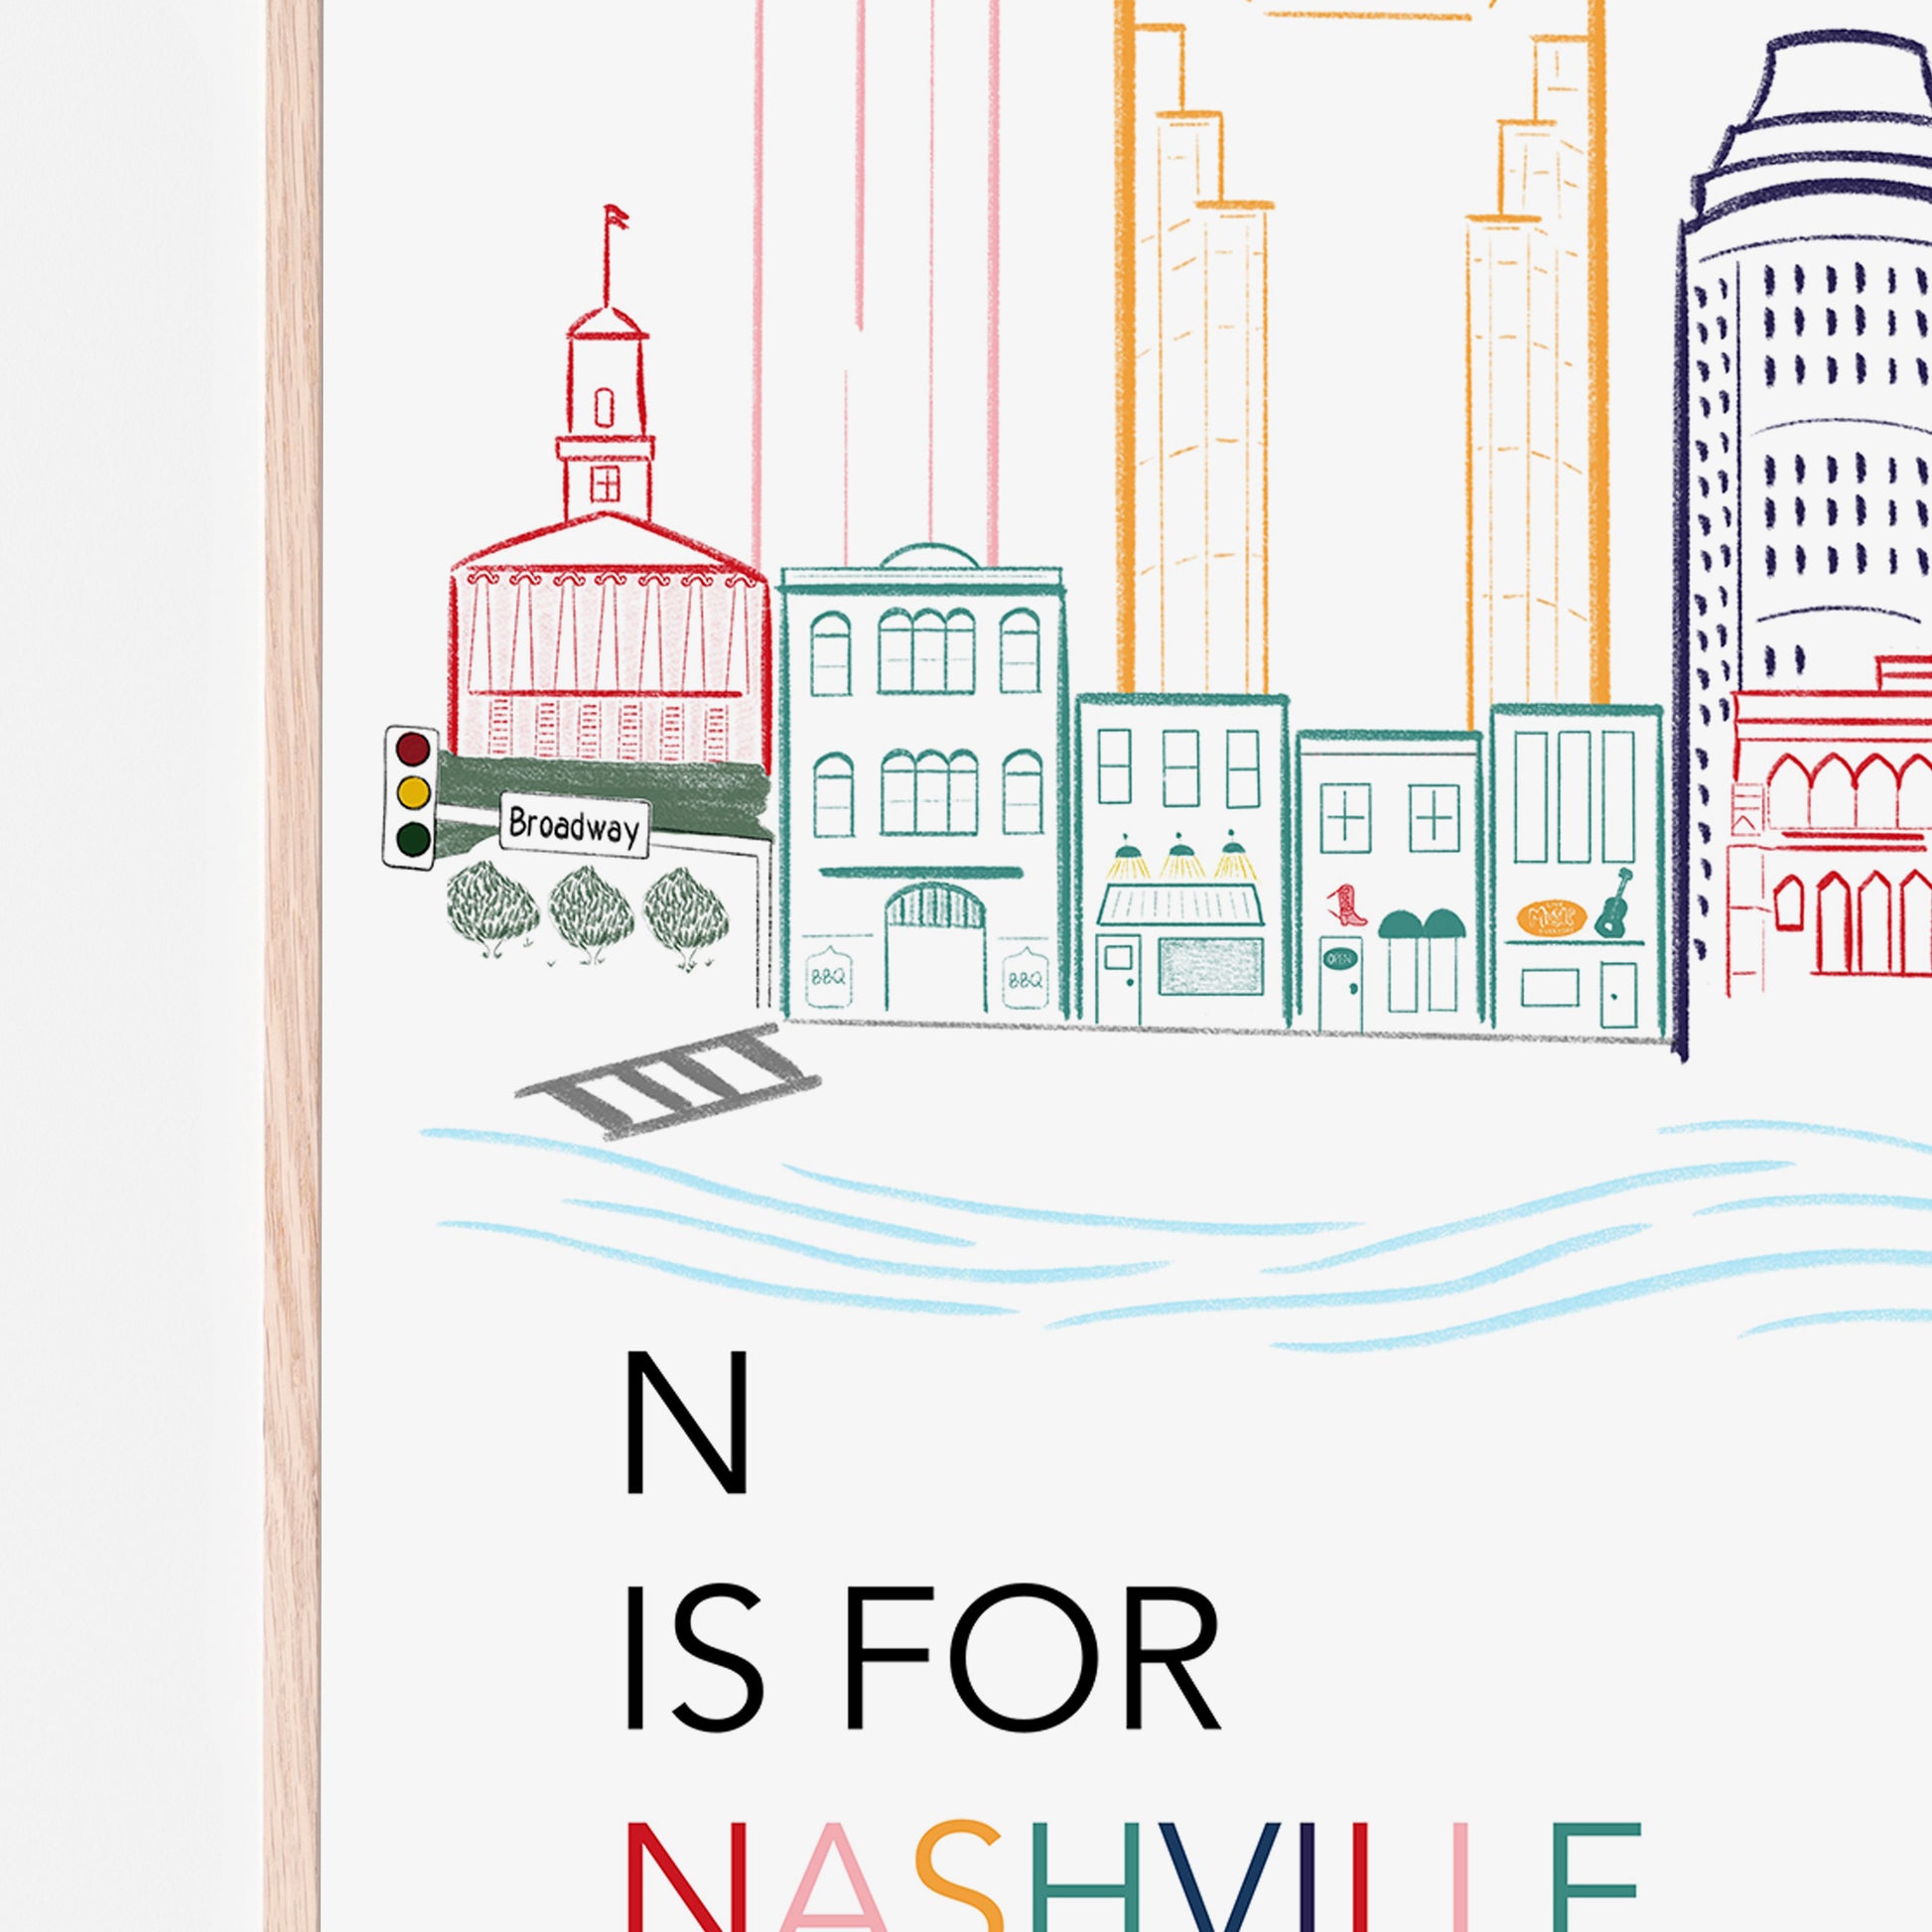 N is for Nashville Art print in rainbow pride colors for baby nursery room, kids bedroom or childs playroom